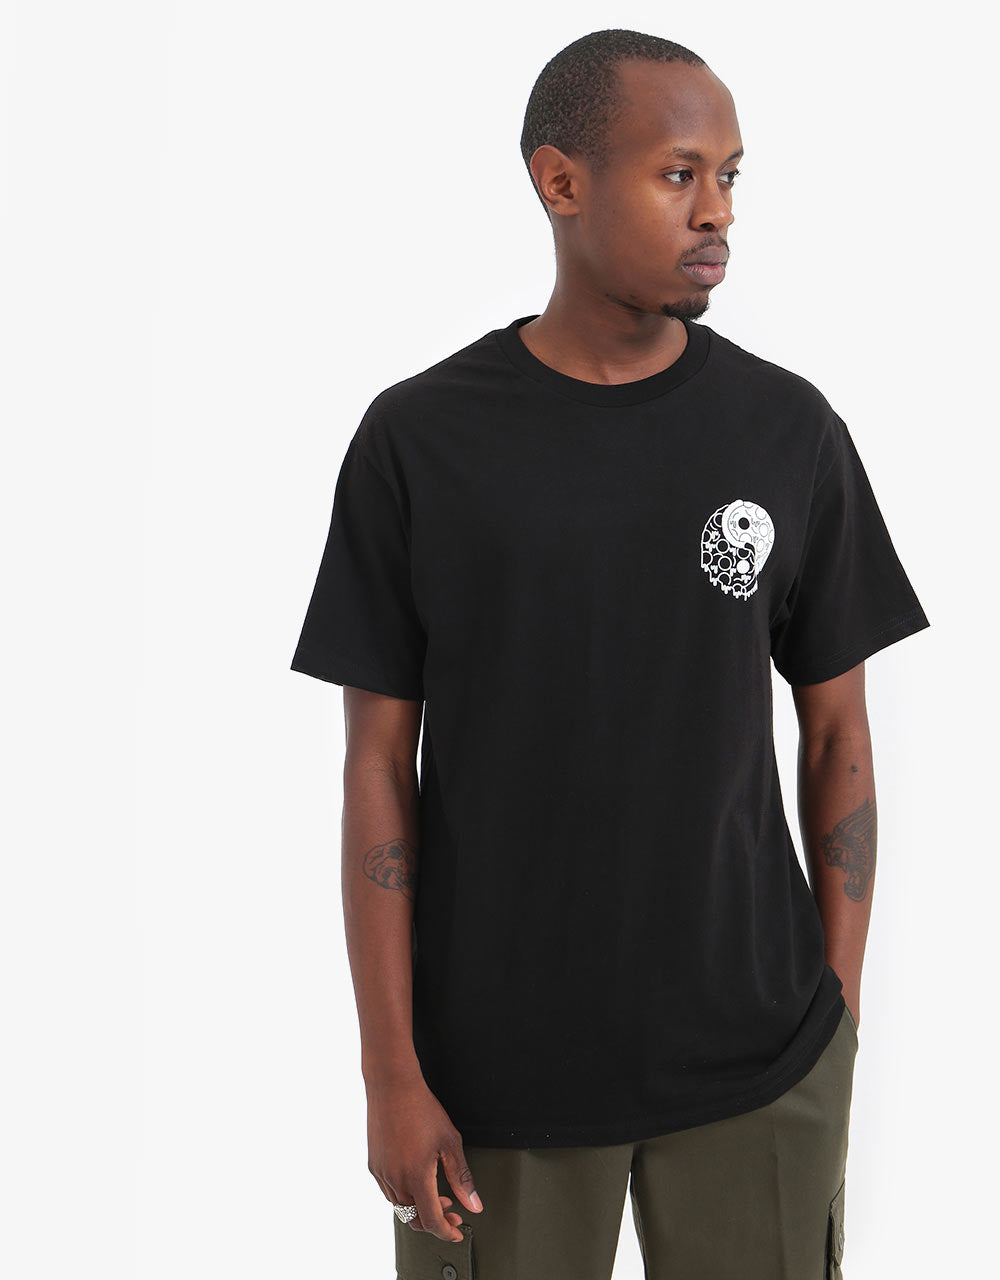 Airblaster Pizza Chill T-Shirt - Black/GITD